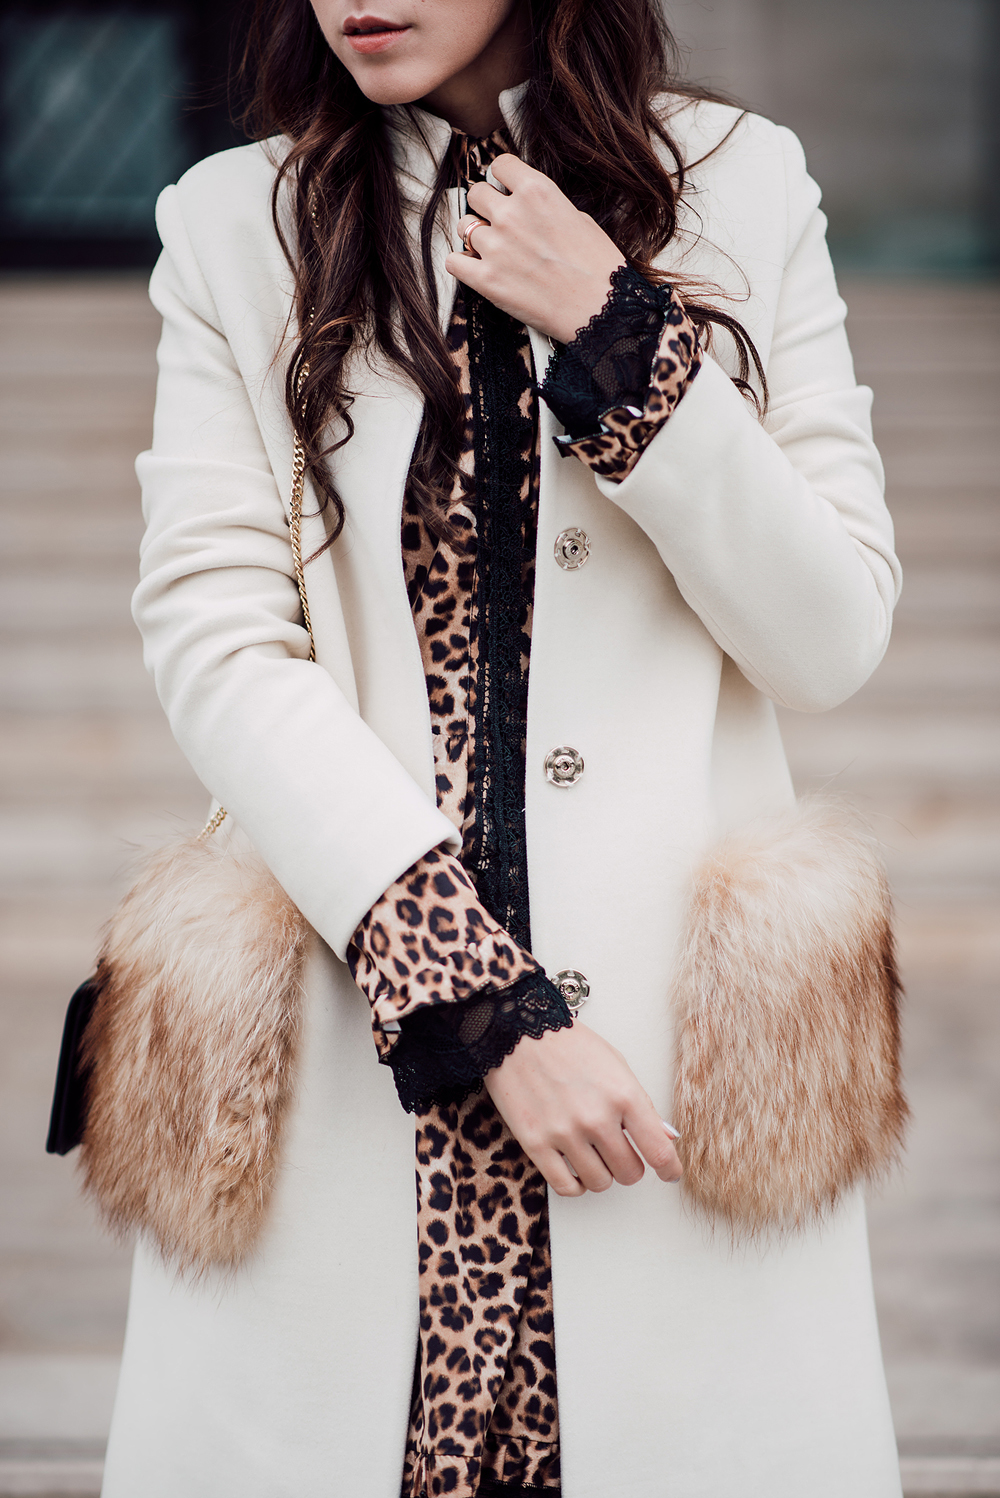 eva-ahacevcic_love-eva_terminal3_ootd_leopard-print_dress_fashion-blogger-5